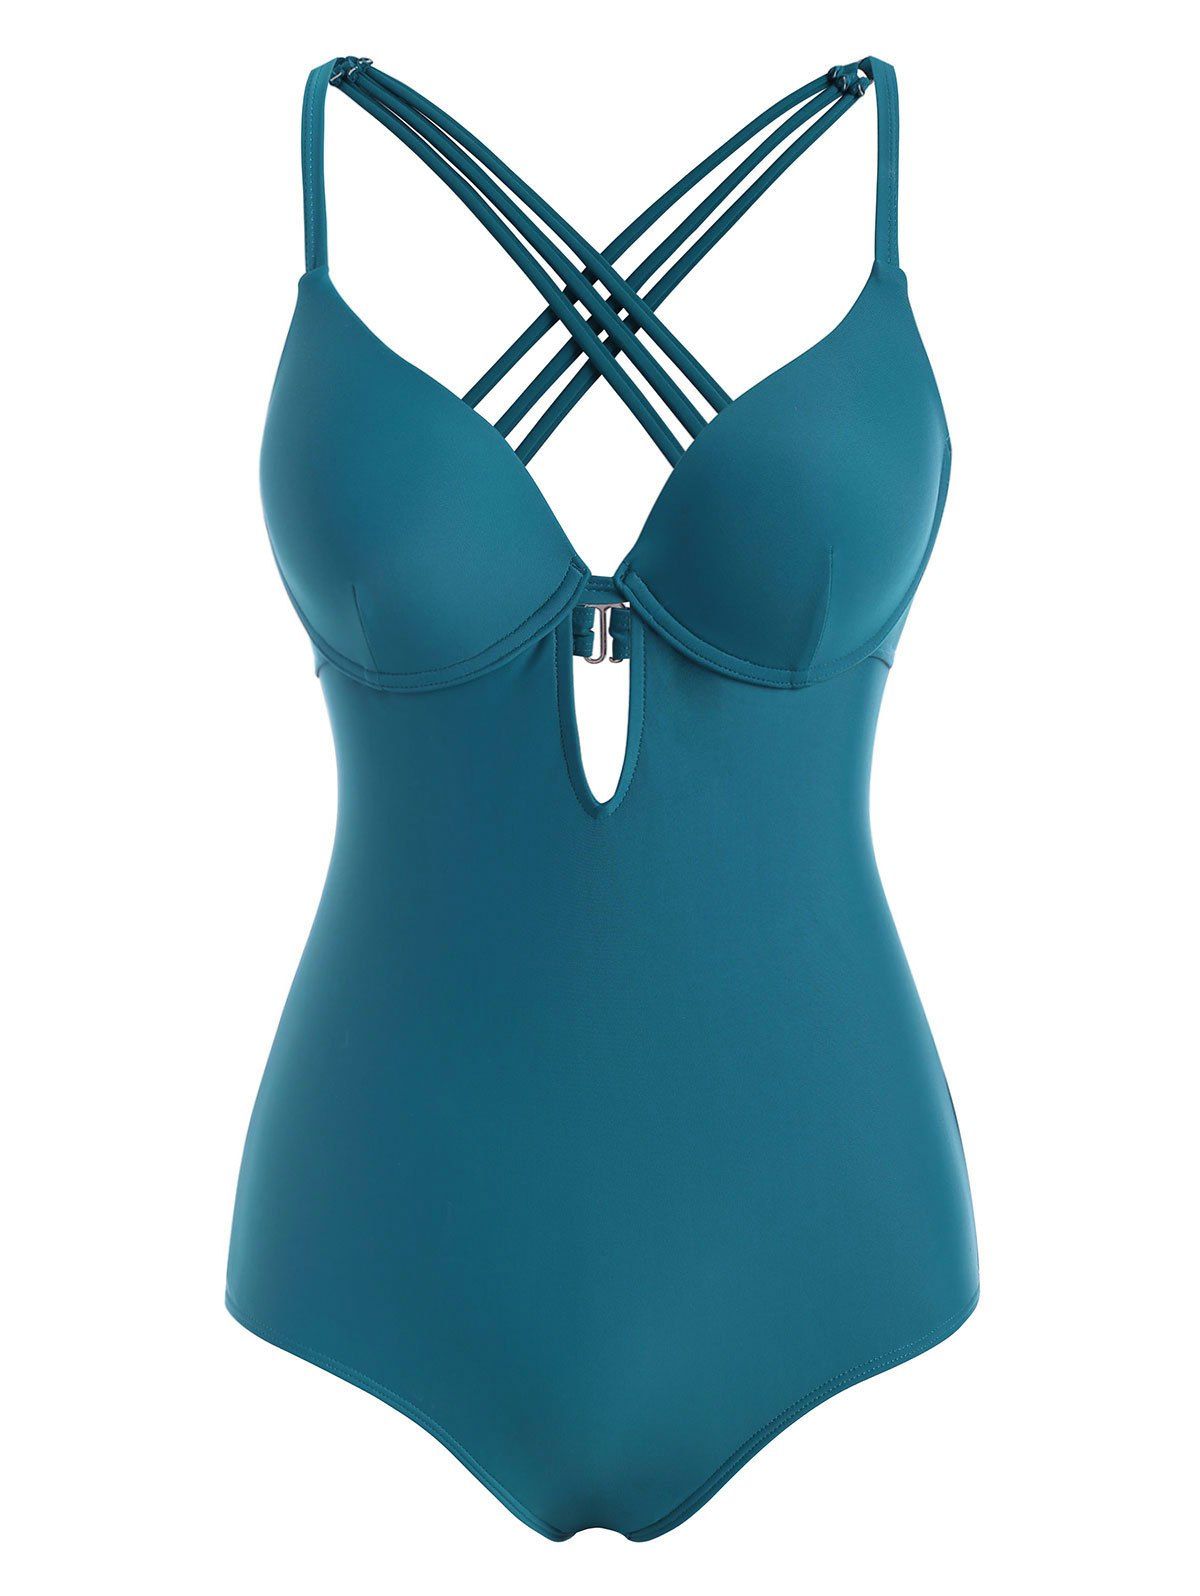 Criss Cross Cut Out Swimsuit Underwire Keyhole Push Up One-piece Swimsuit - BLUE M